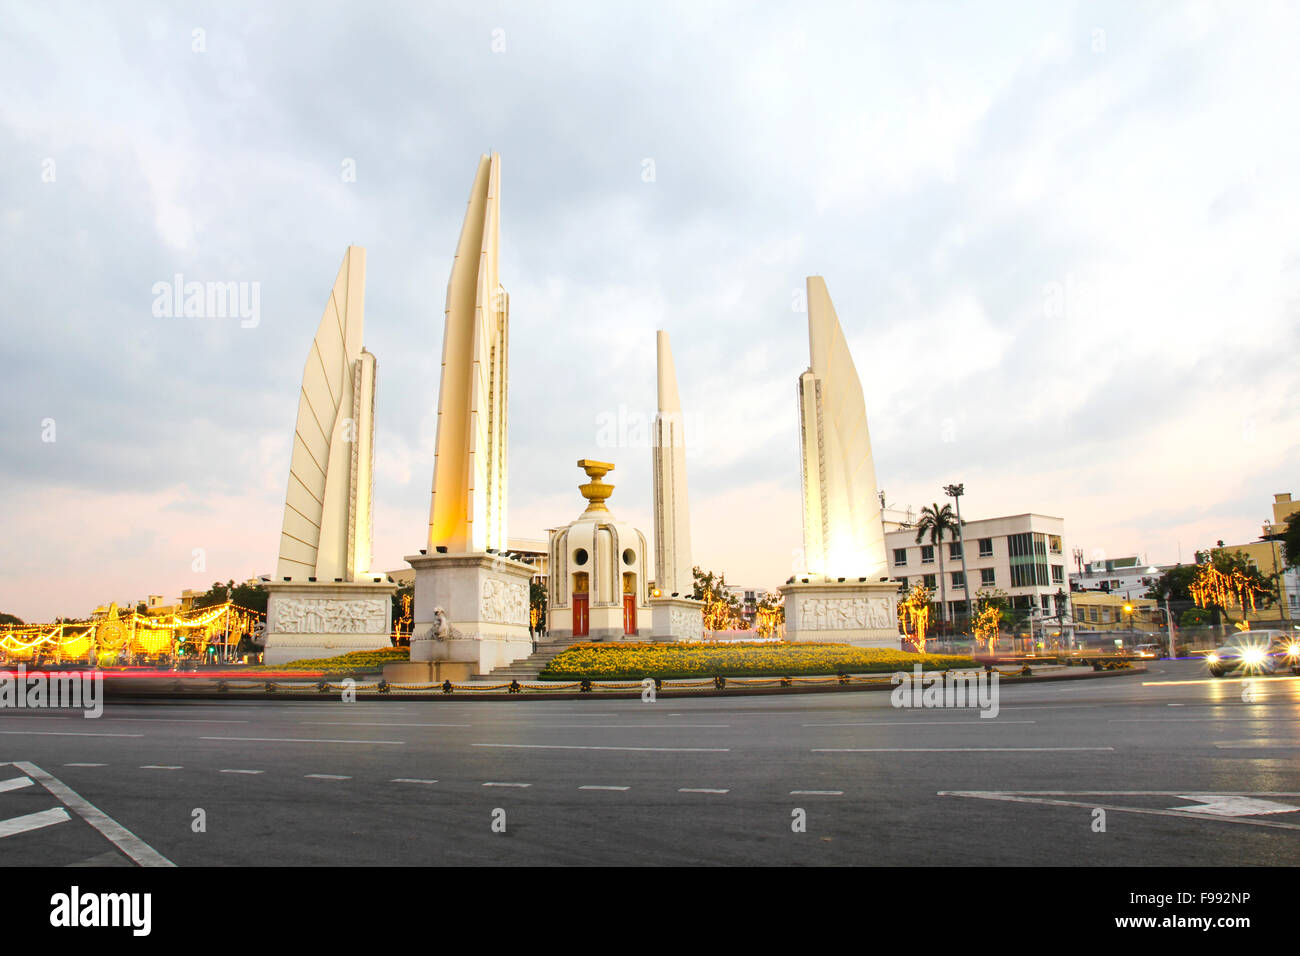 La democrazia un monumento al tramonto, Bangkok, Thailandia. Foto Stock